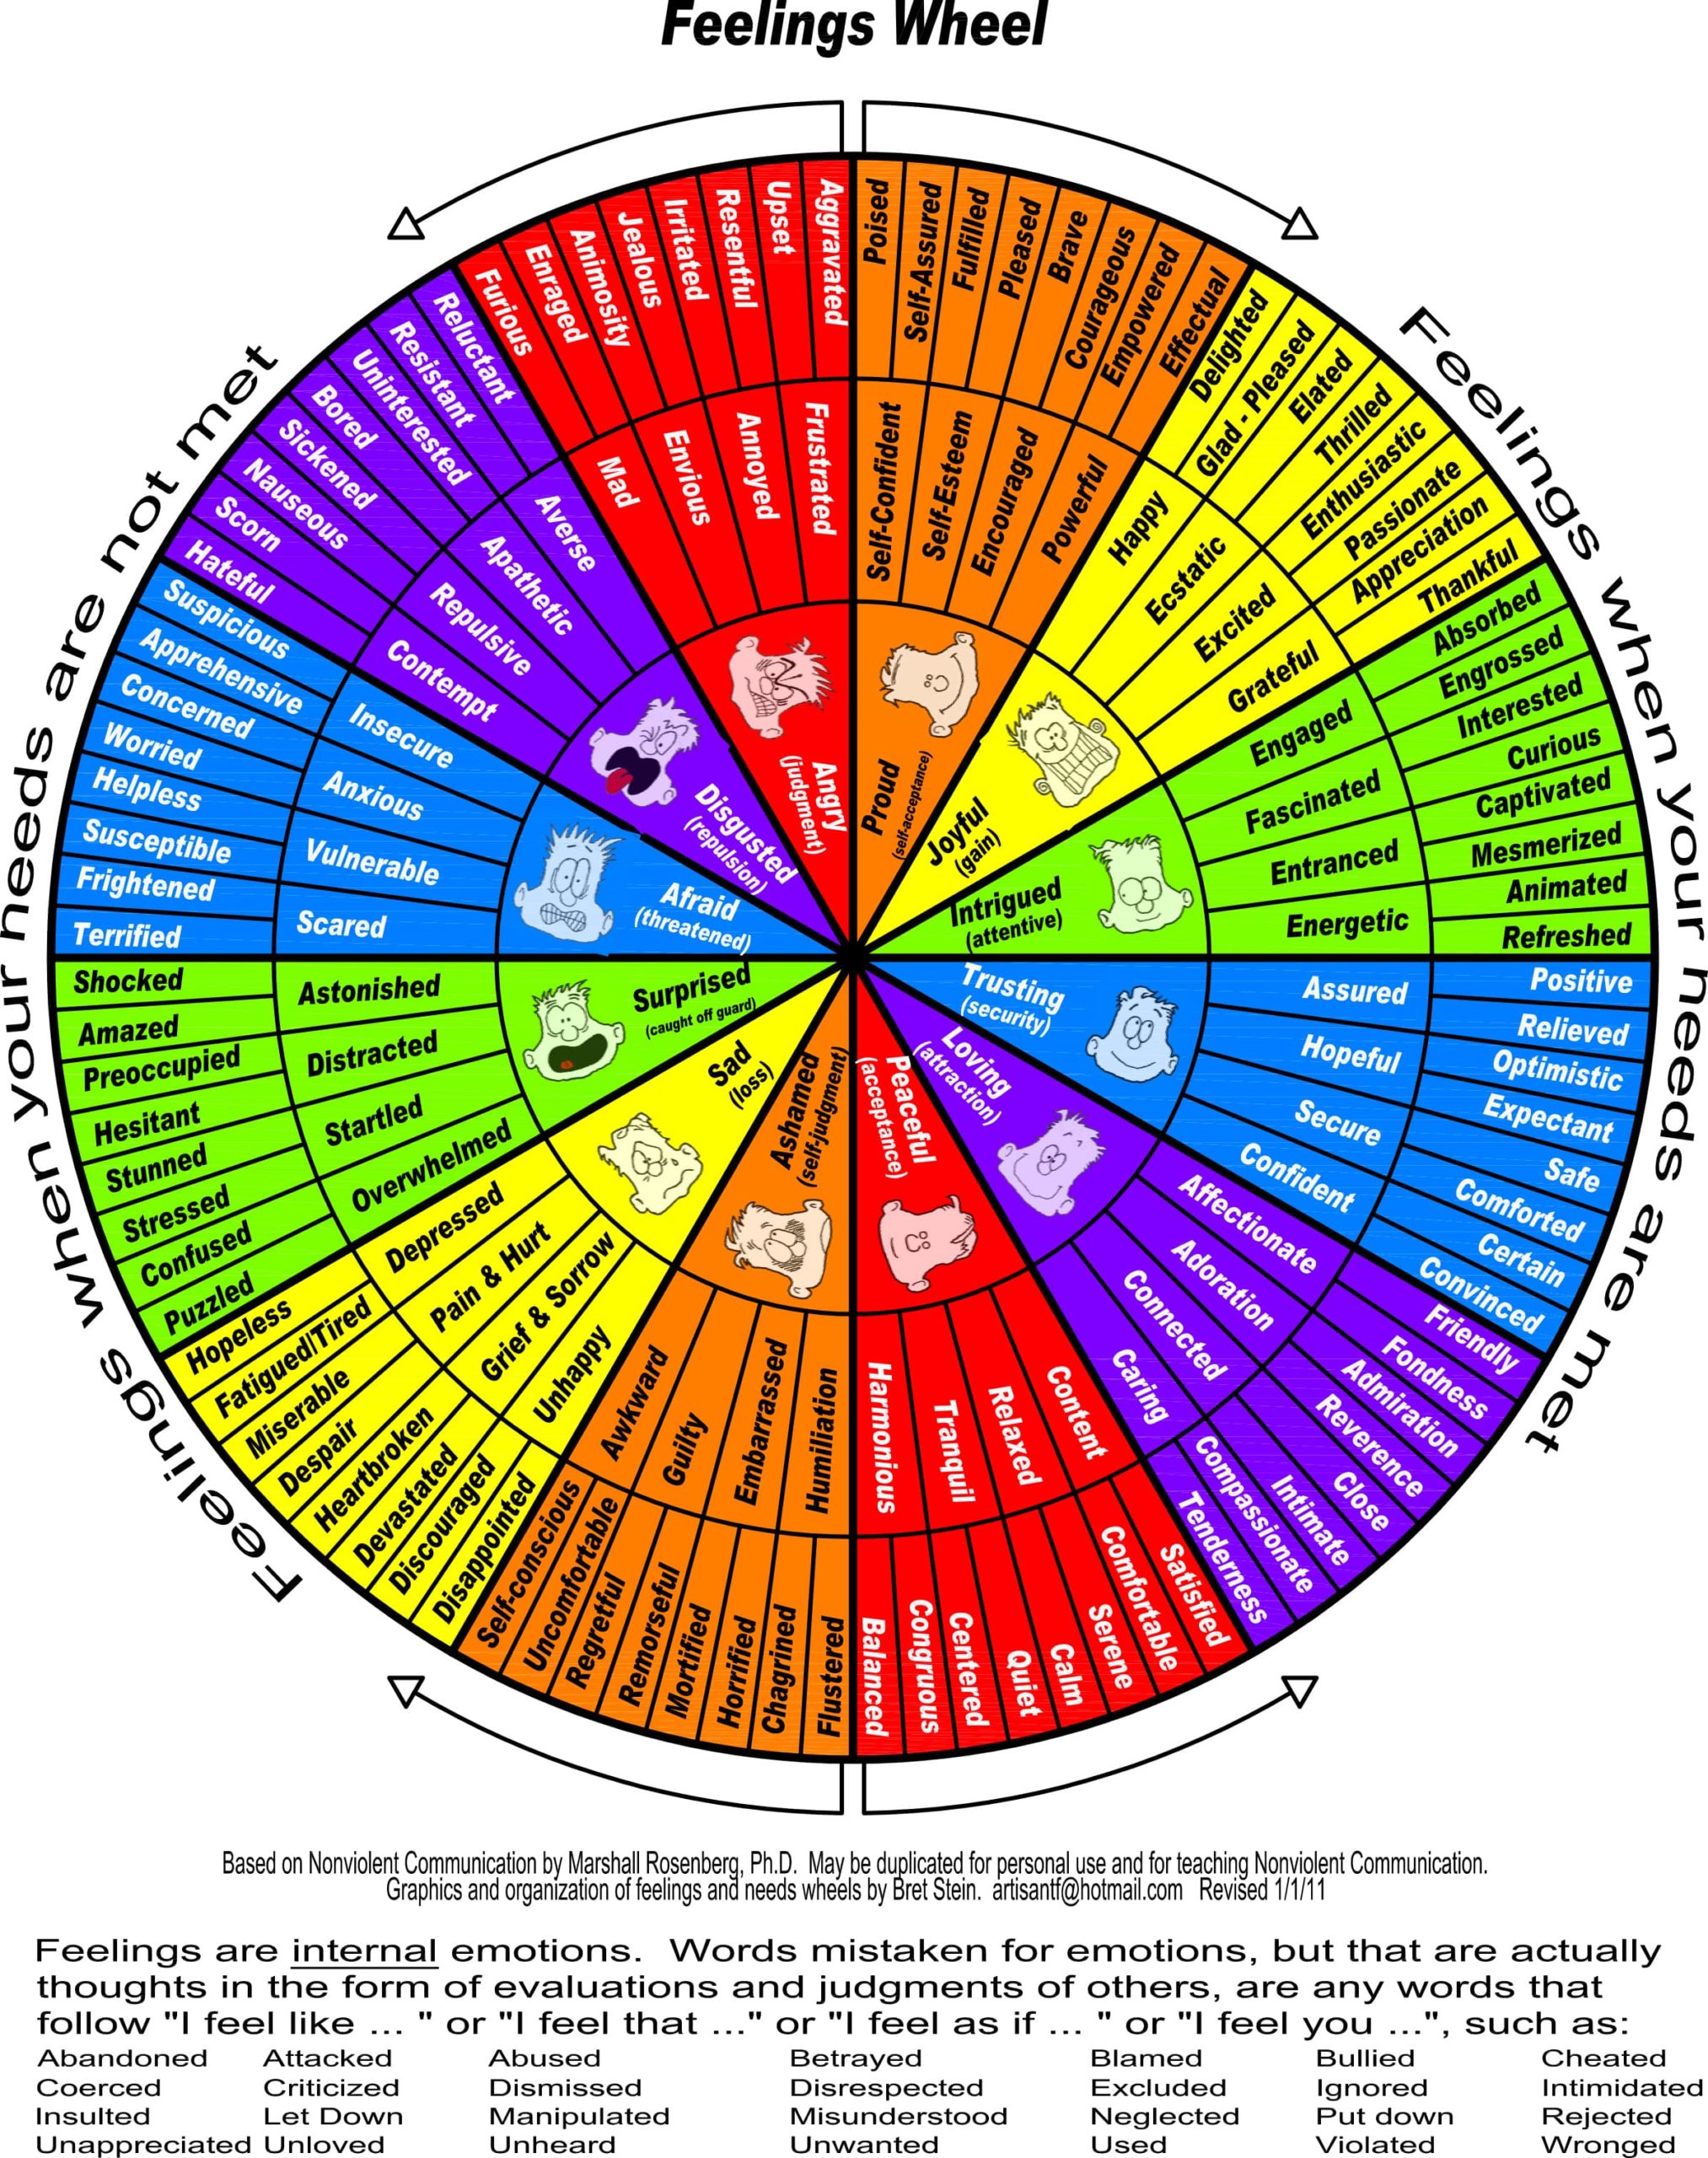 Feelings Wheel Based on Non-violent communication